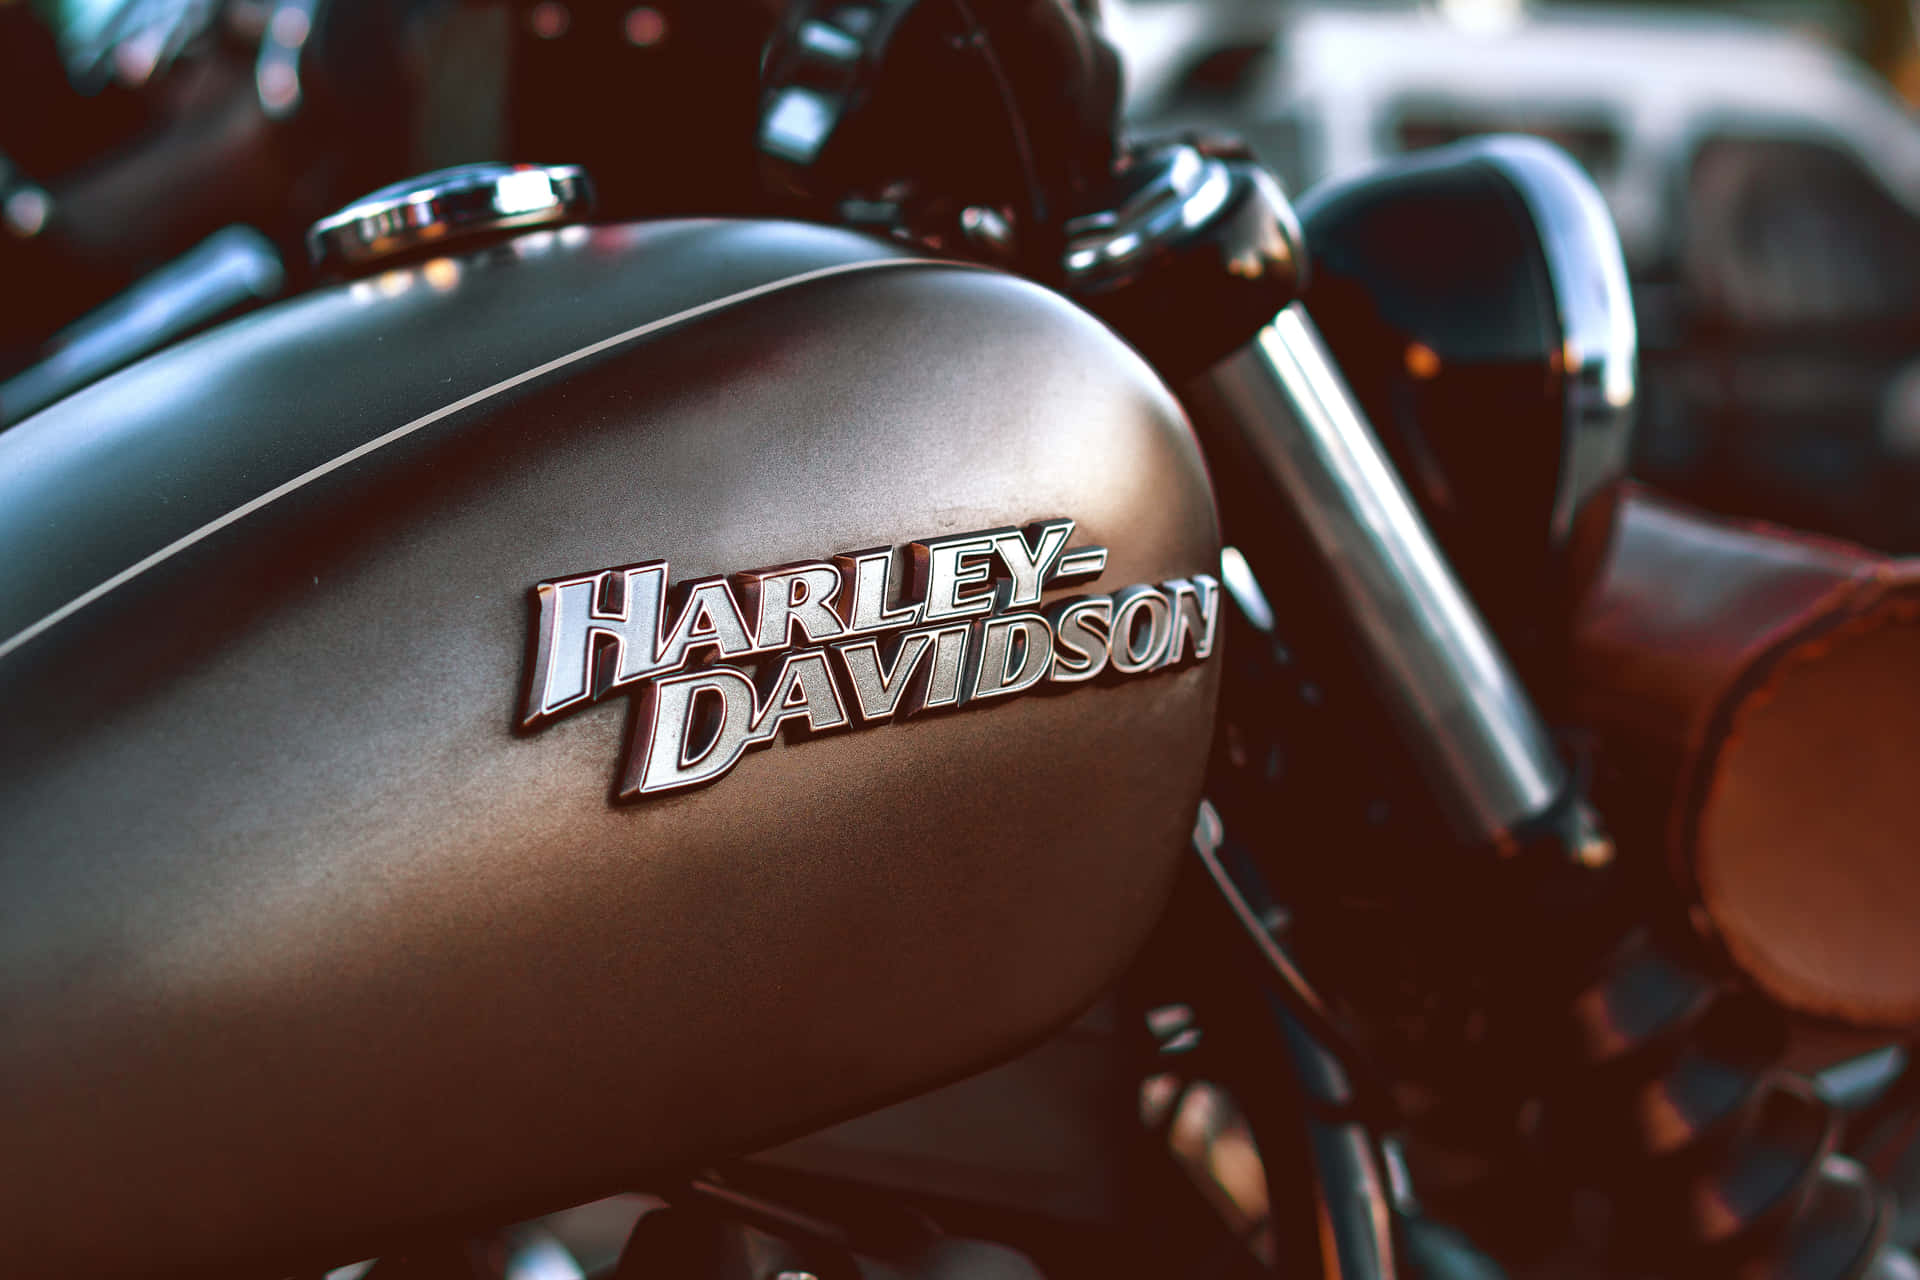 Harley Davidson Logo In Motorcycle Background